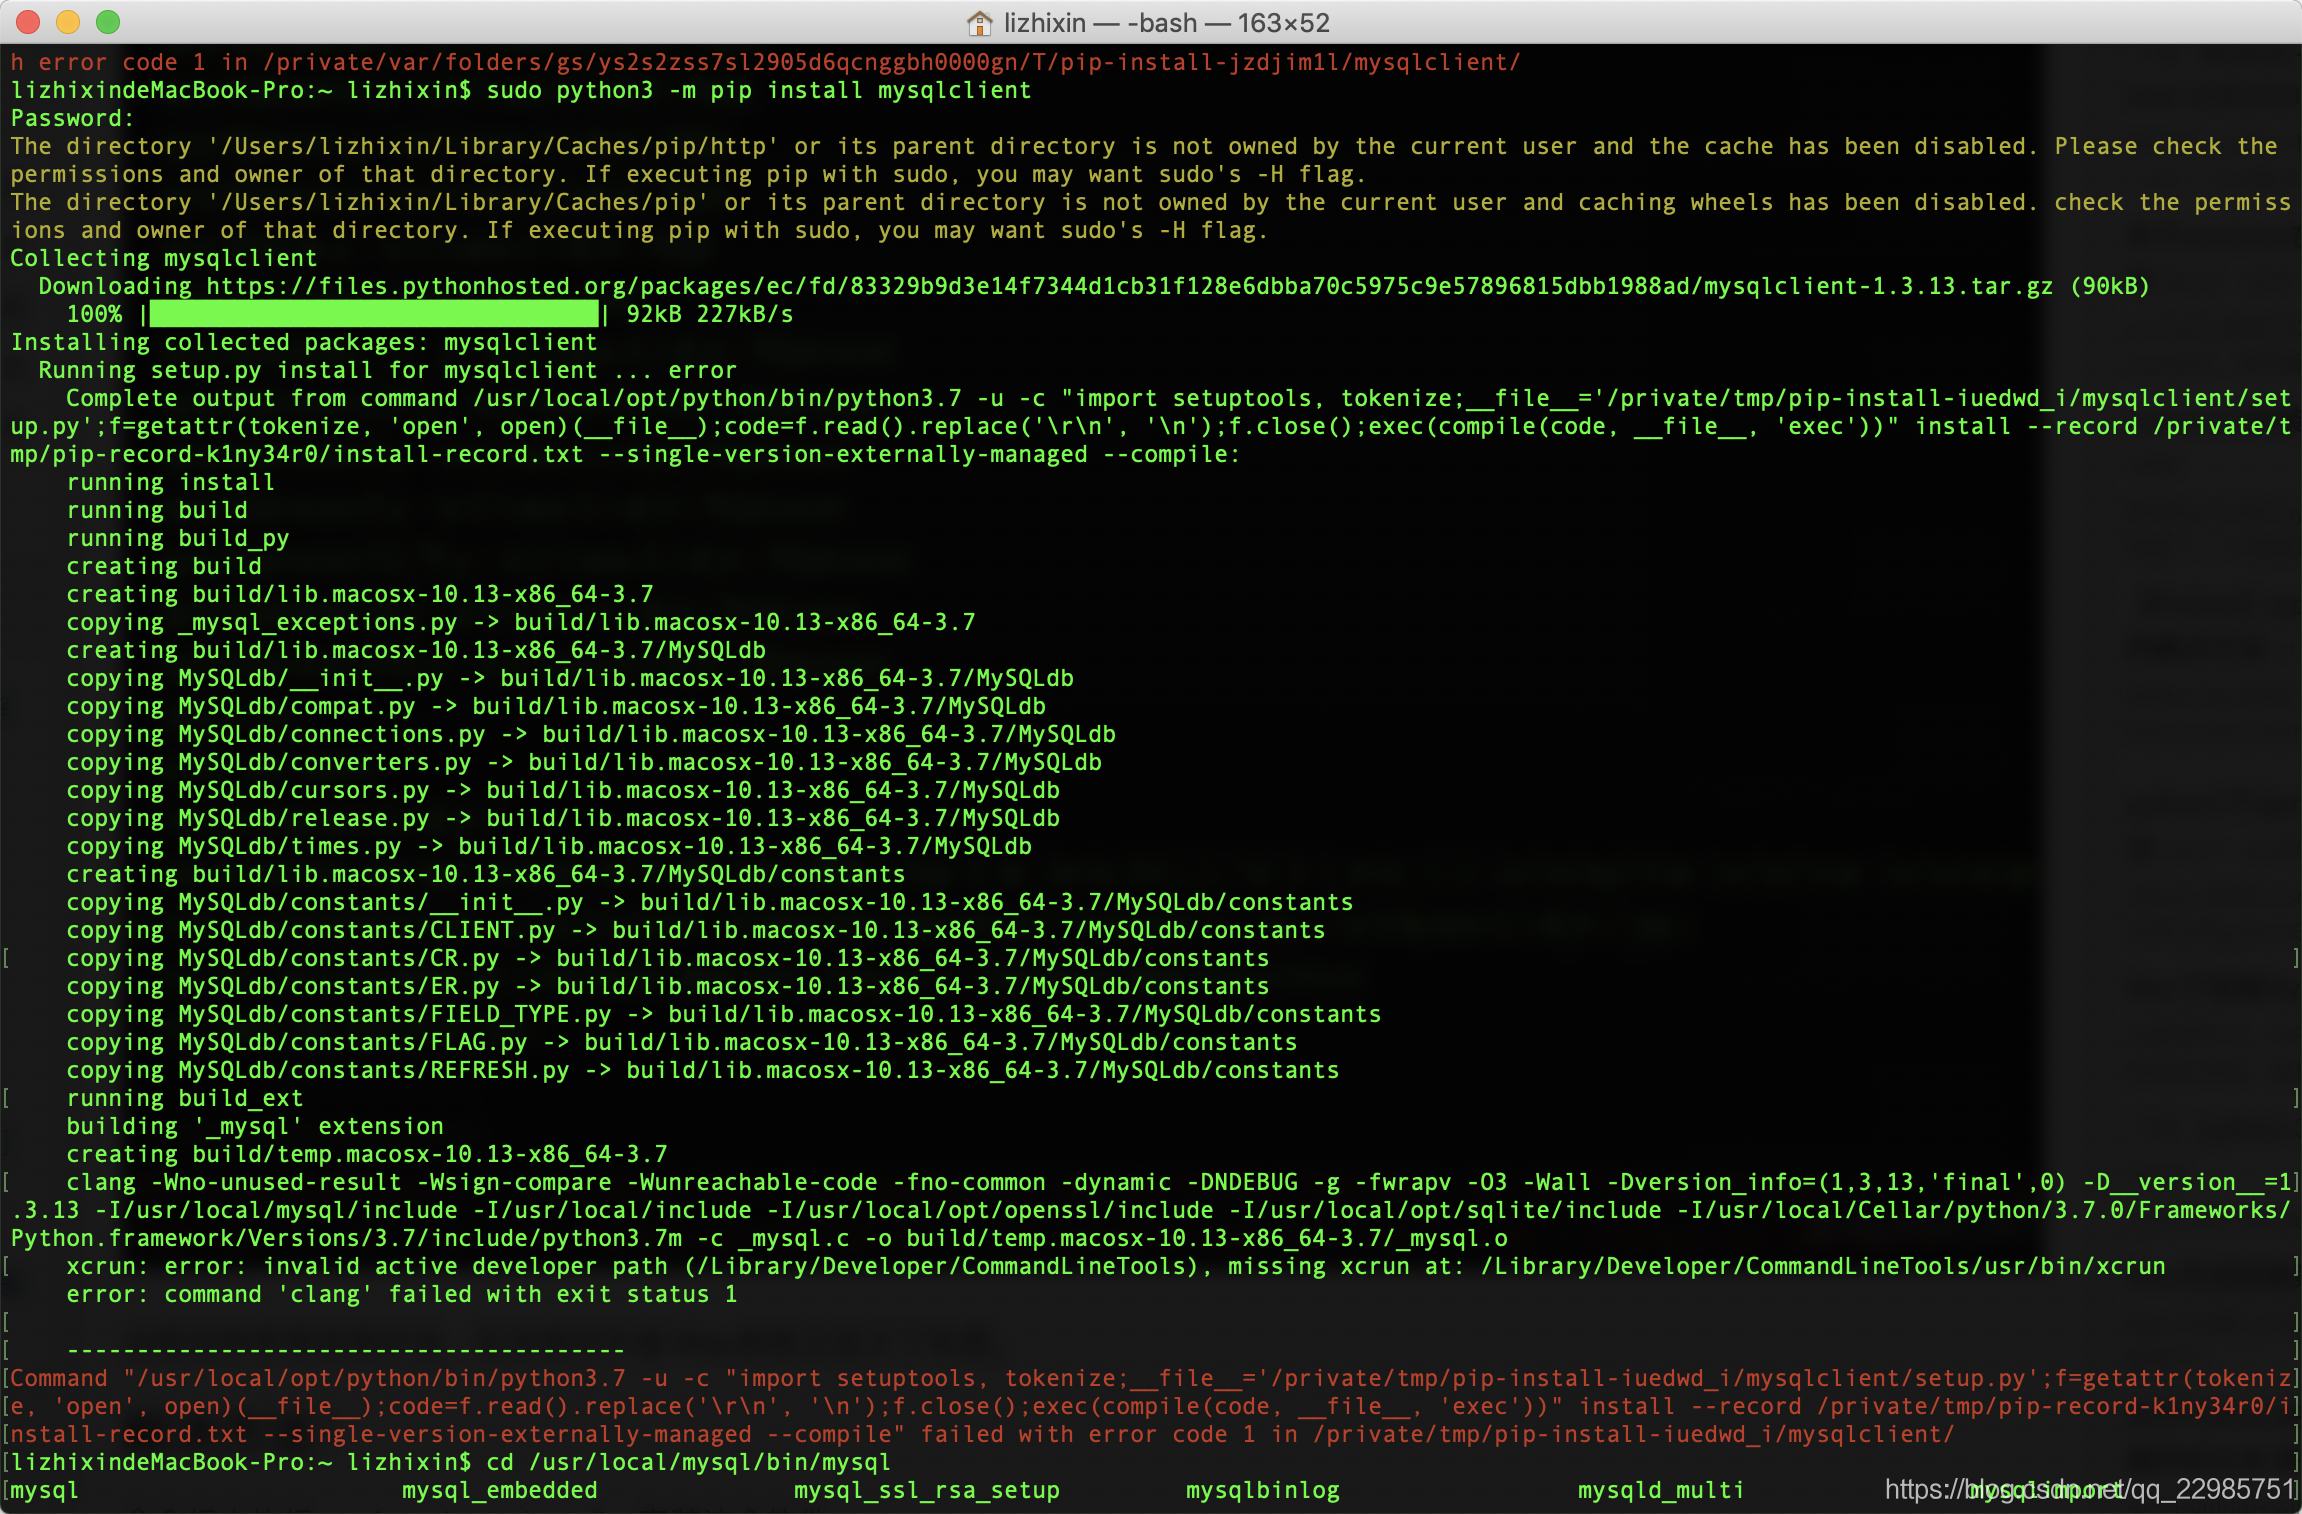 Mac Invalid Active Developer Path (/Library/Developer/Commandlinetools), Missing  Xcrun At: /Library_微风中的一只小刺猬的博客-Csdn博客